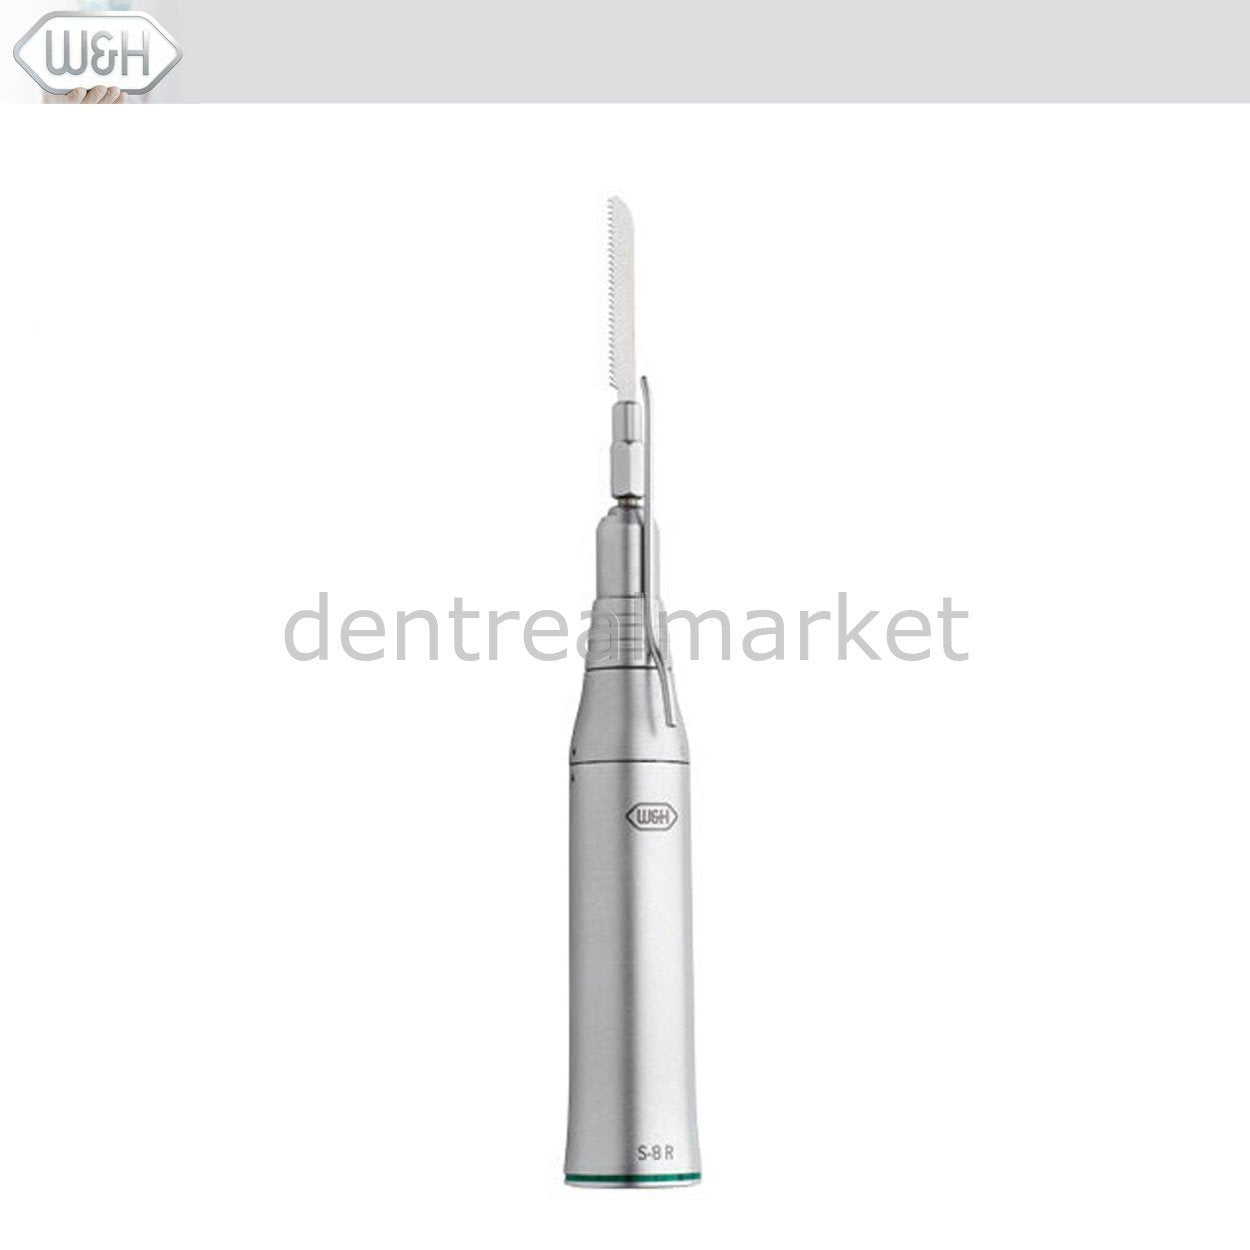 DentrealStore - W&H Dental Surgical Saw Handpiece S-8 R